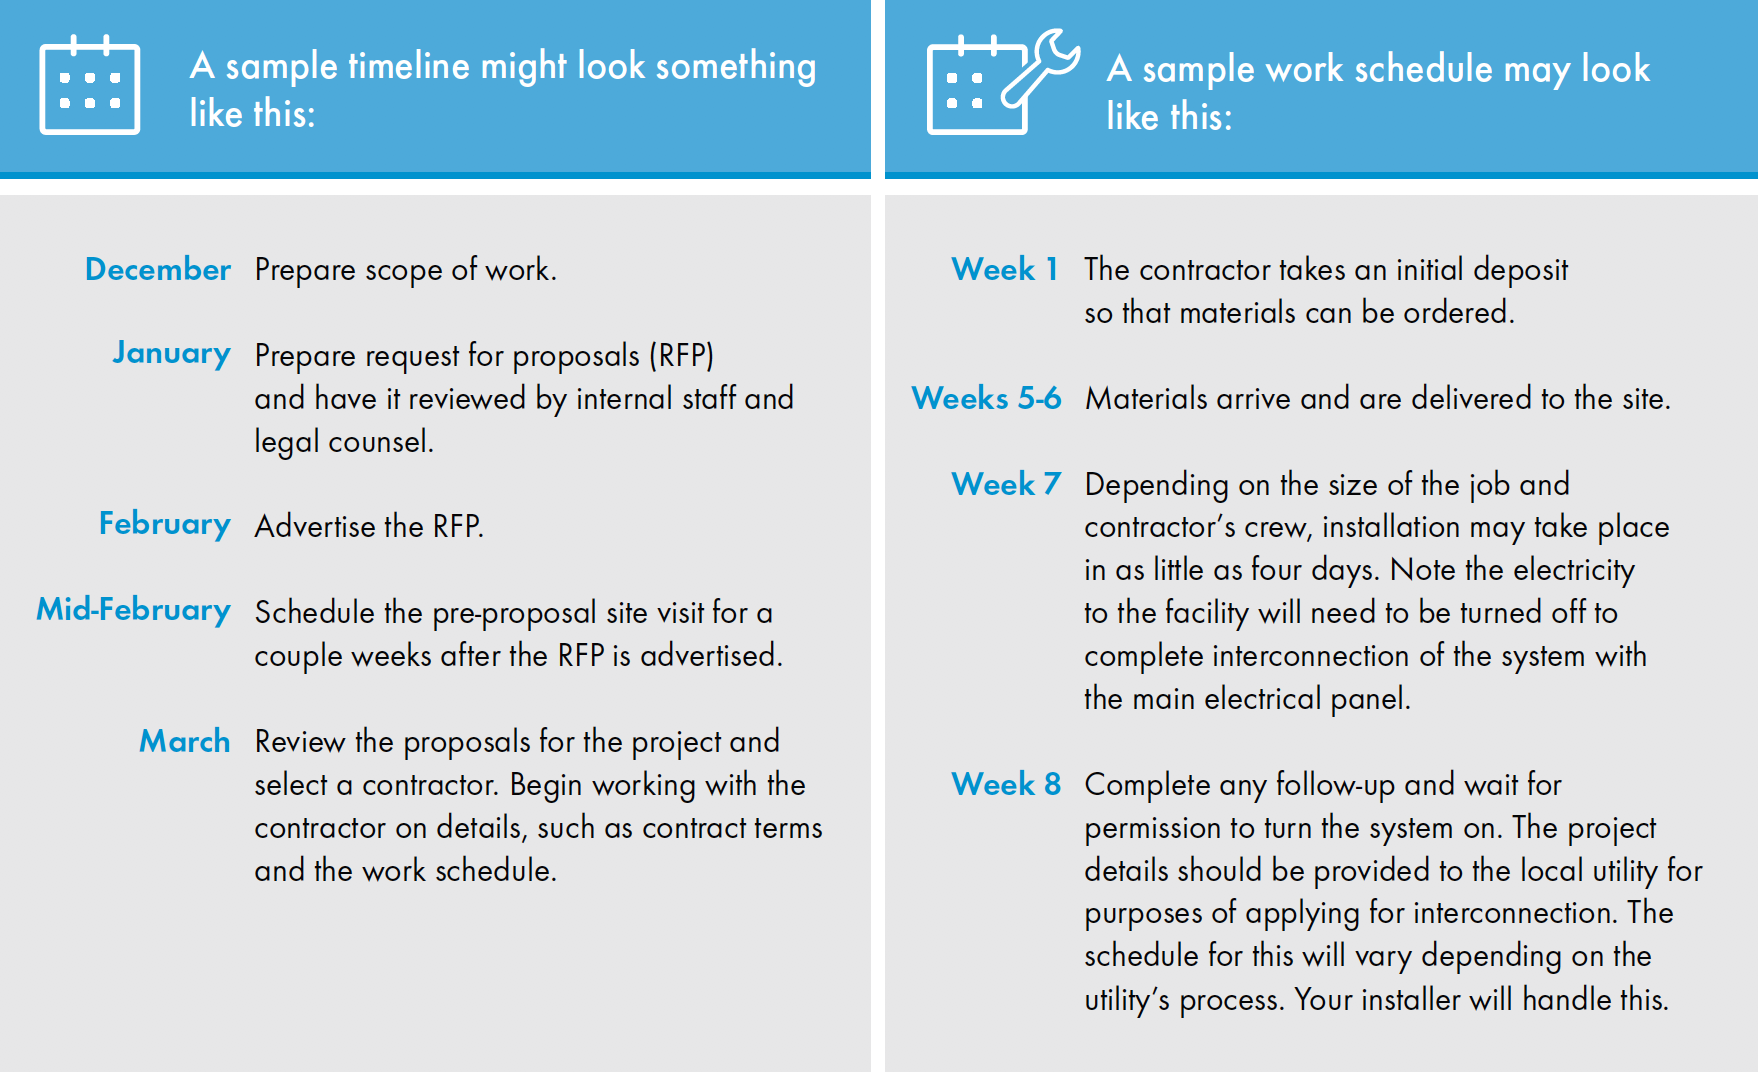 Sample timeline and sample work schedule